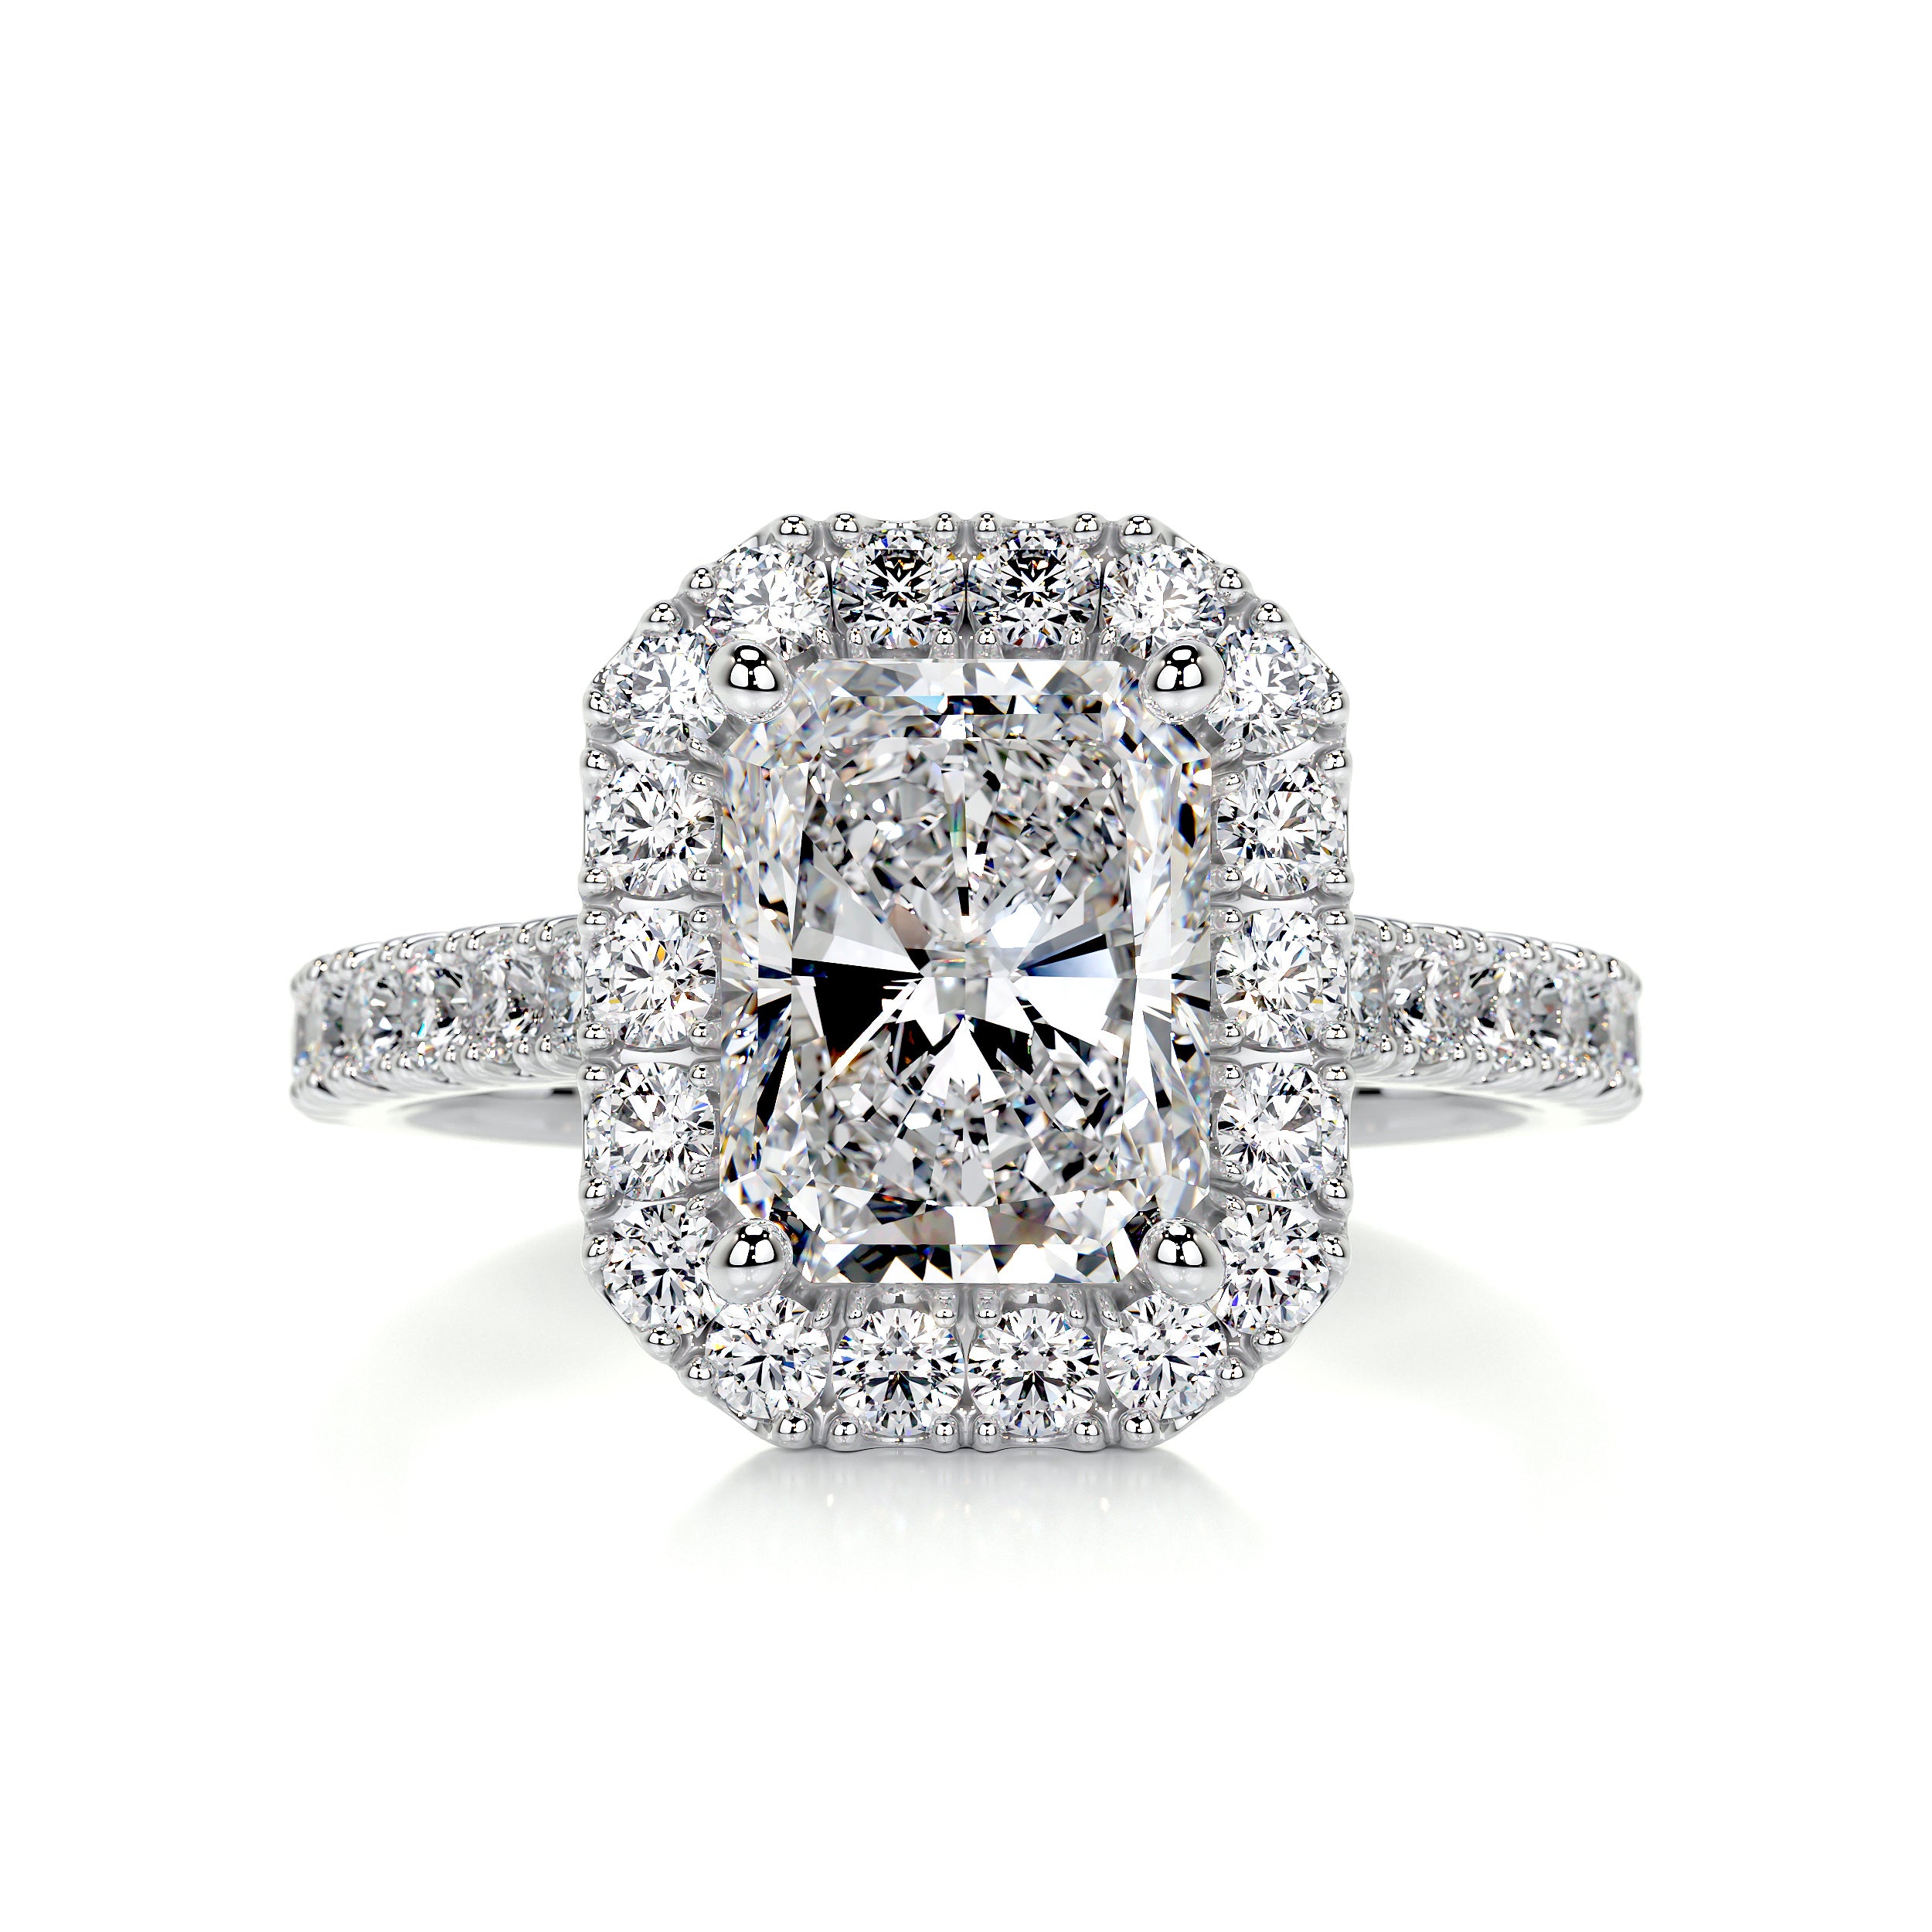 Andrea Diamond Engagement Ring   (2.25 Carat) -18K White Gold